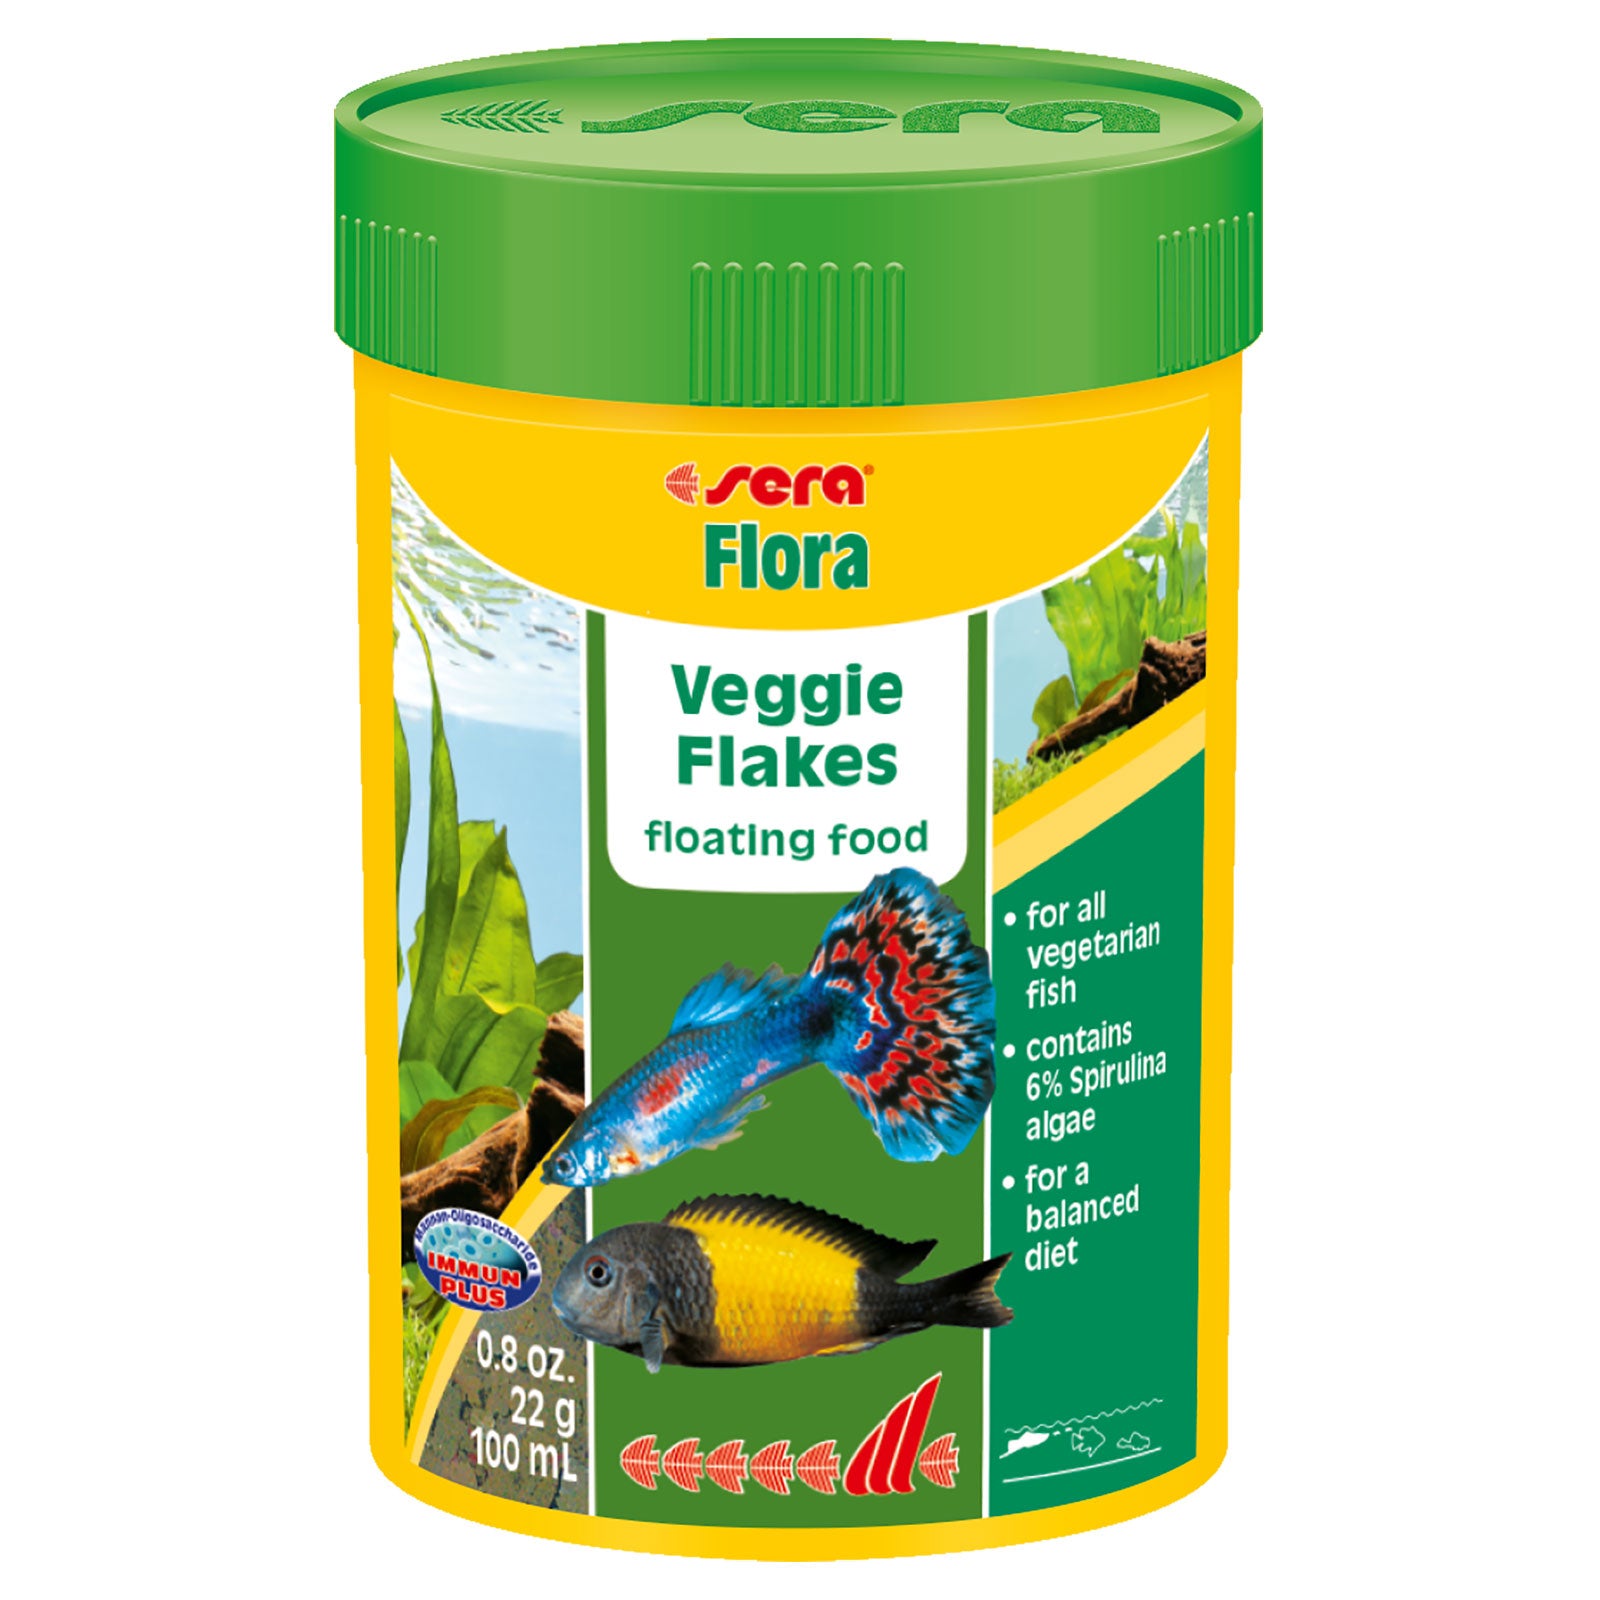 Sera Flora Nature Veggie Flakes